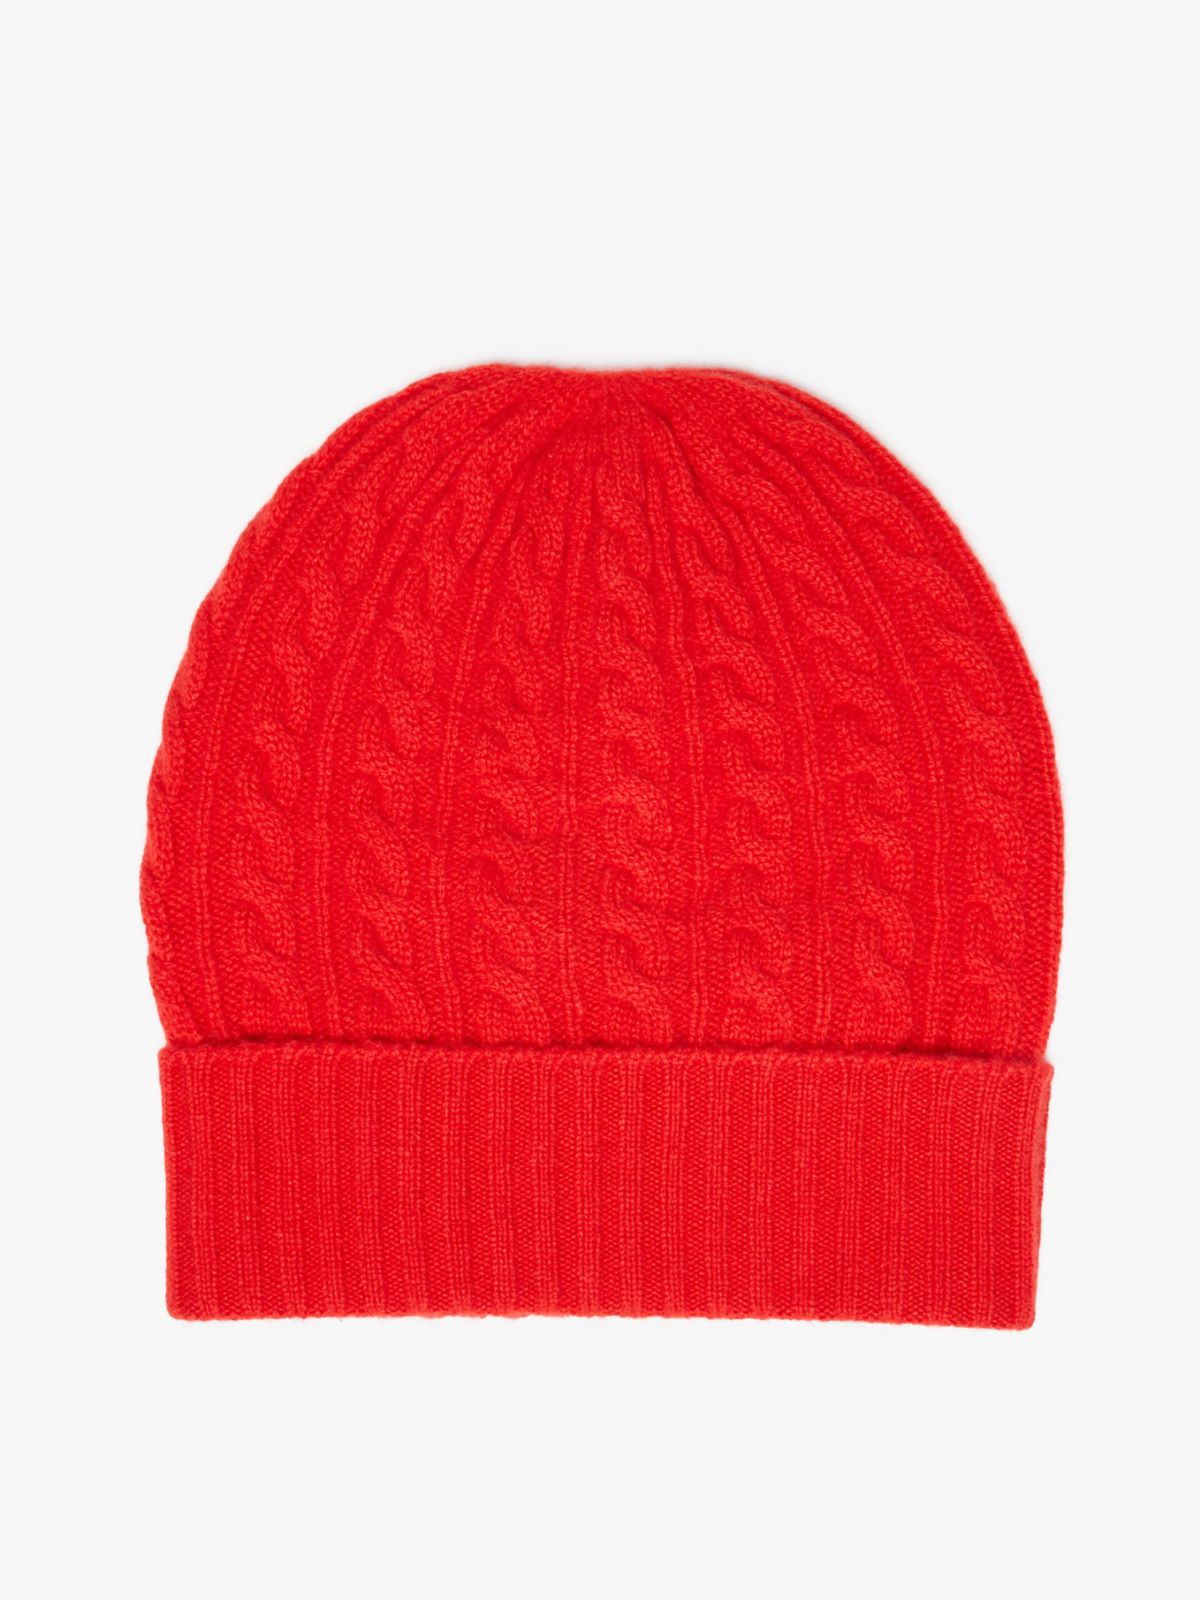 Cashmere hat - RED - Weekend Max Mara